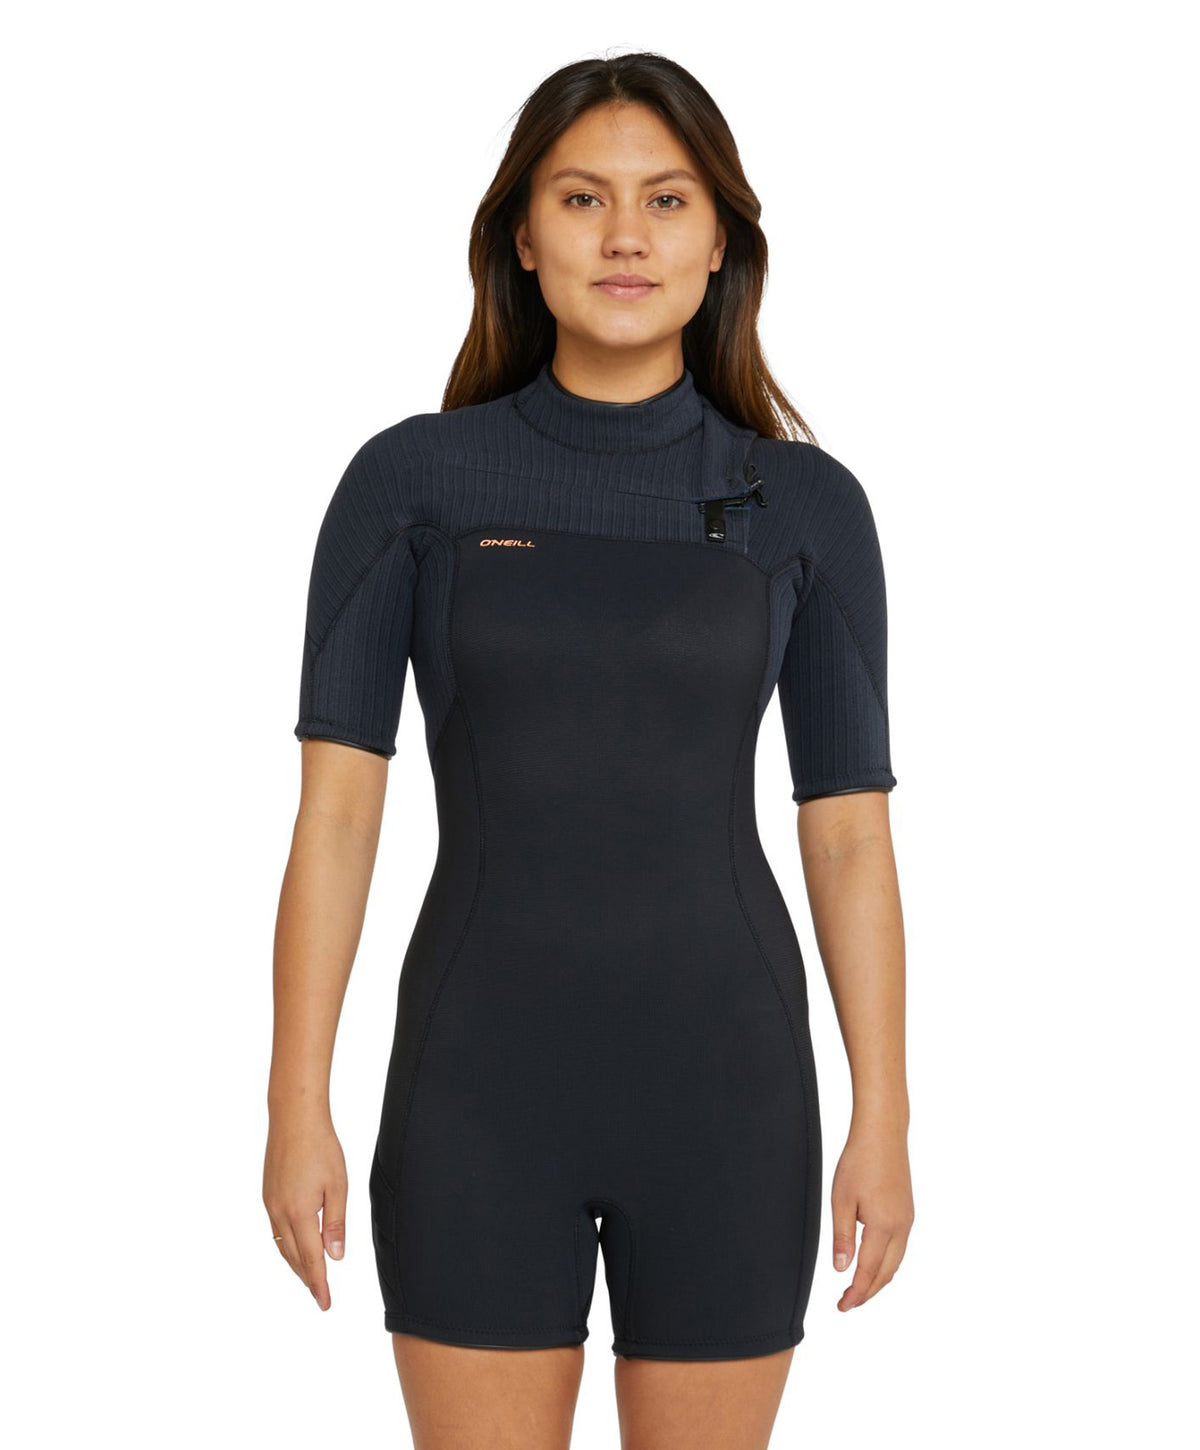 Women's HyperFreak Short Sleeve Spring Suit 2mm Wetsuit - Black